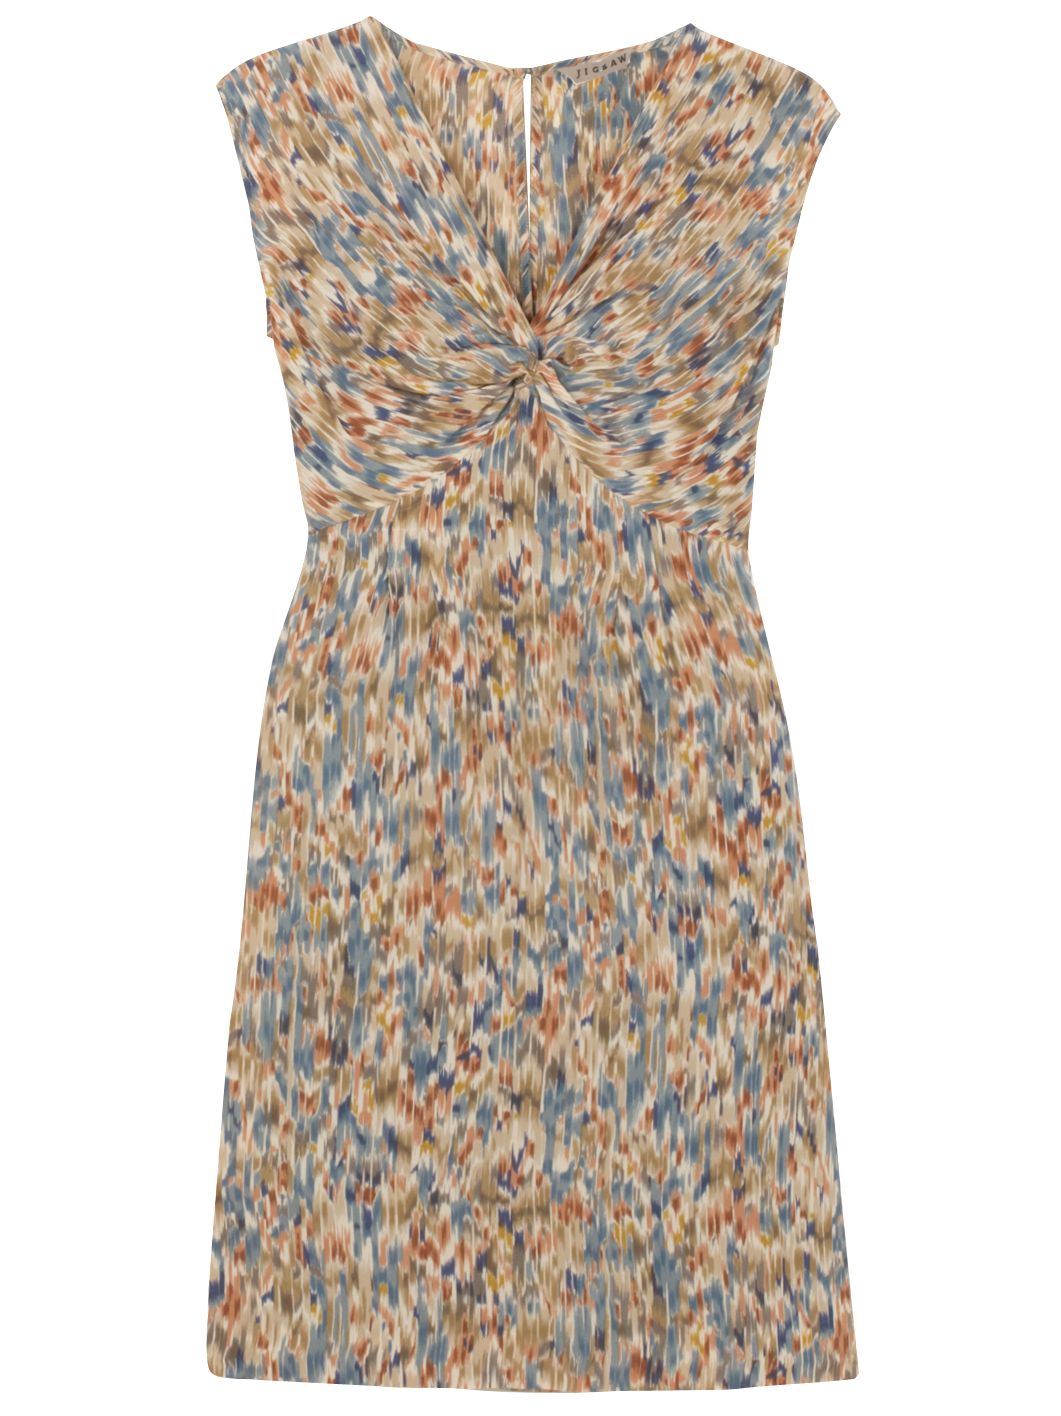 Jigsaw Blurred Floral Print Dress, Blue at John Lewis